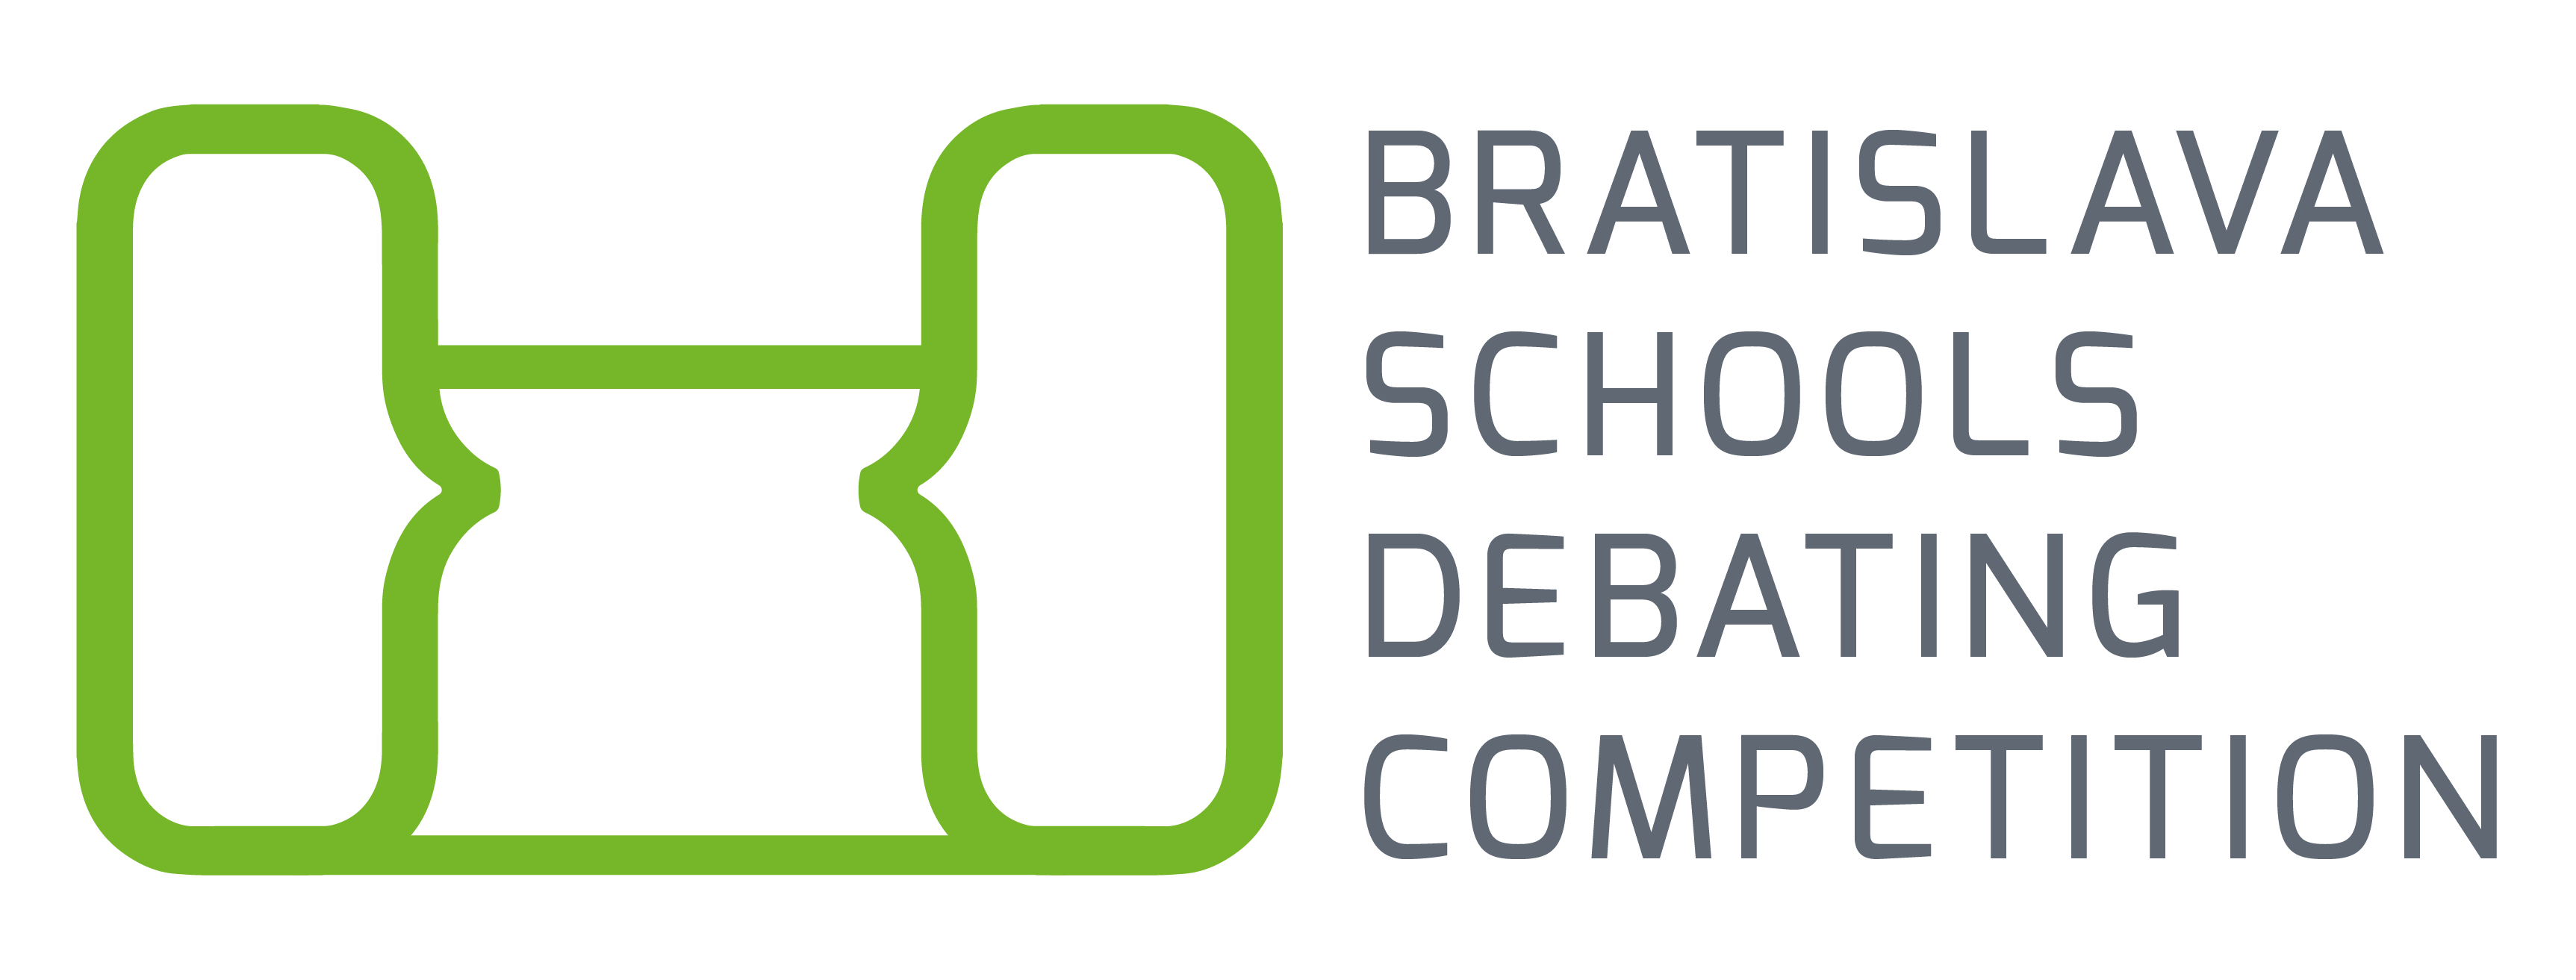 Bratislava Schools Debating Competiton